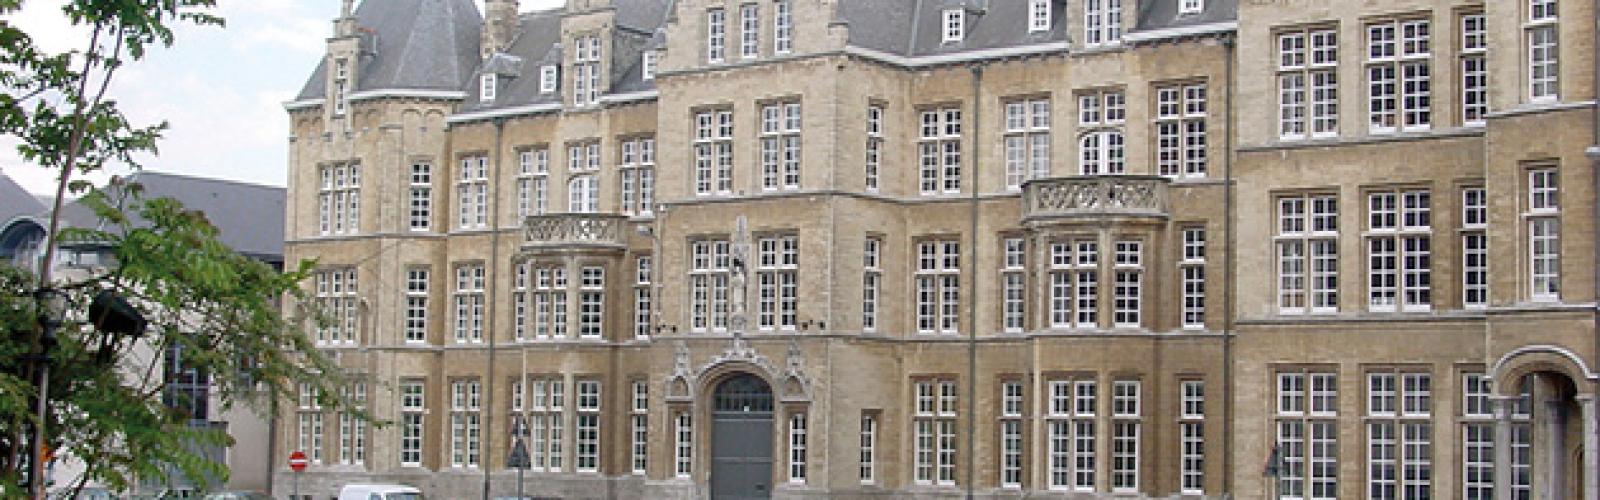 campus Gent Vlerick Business School